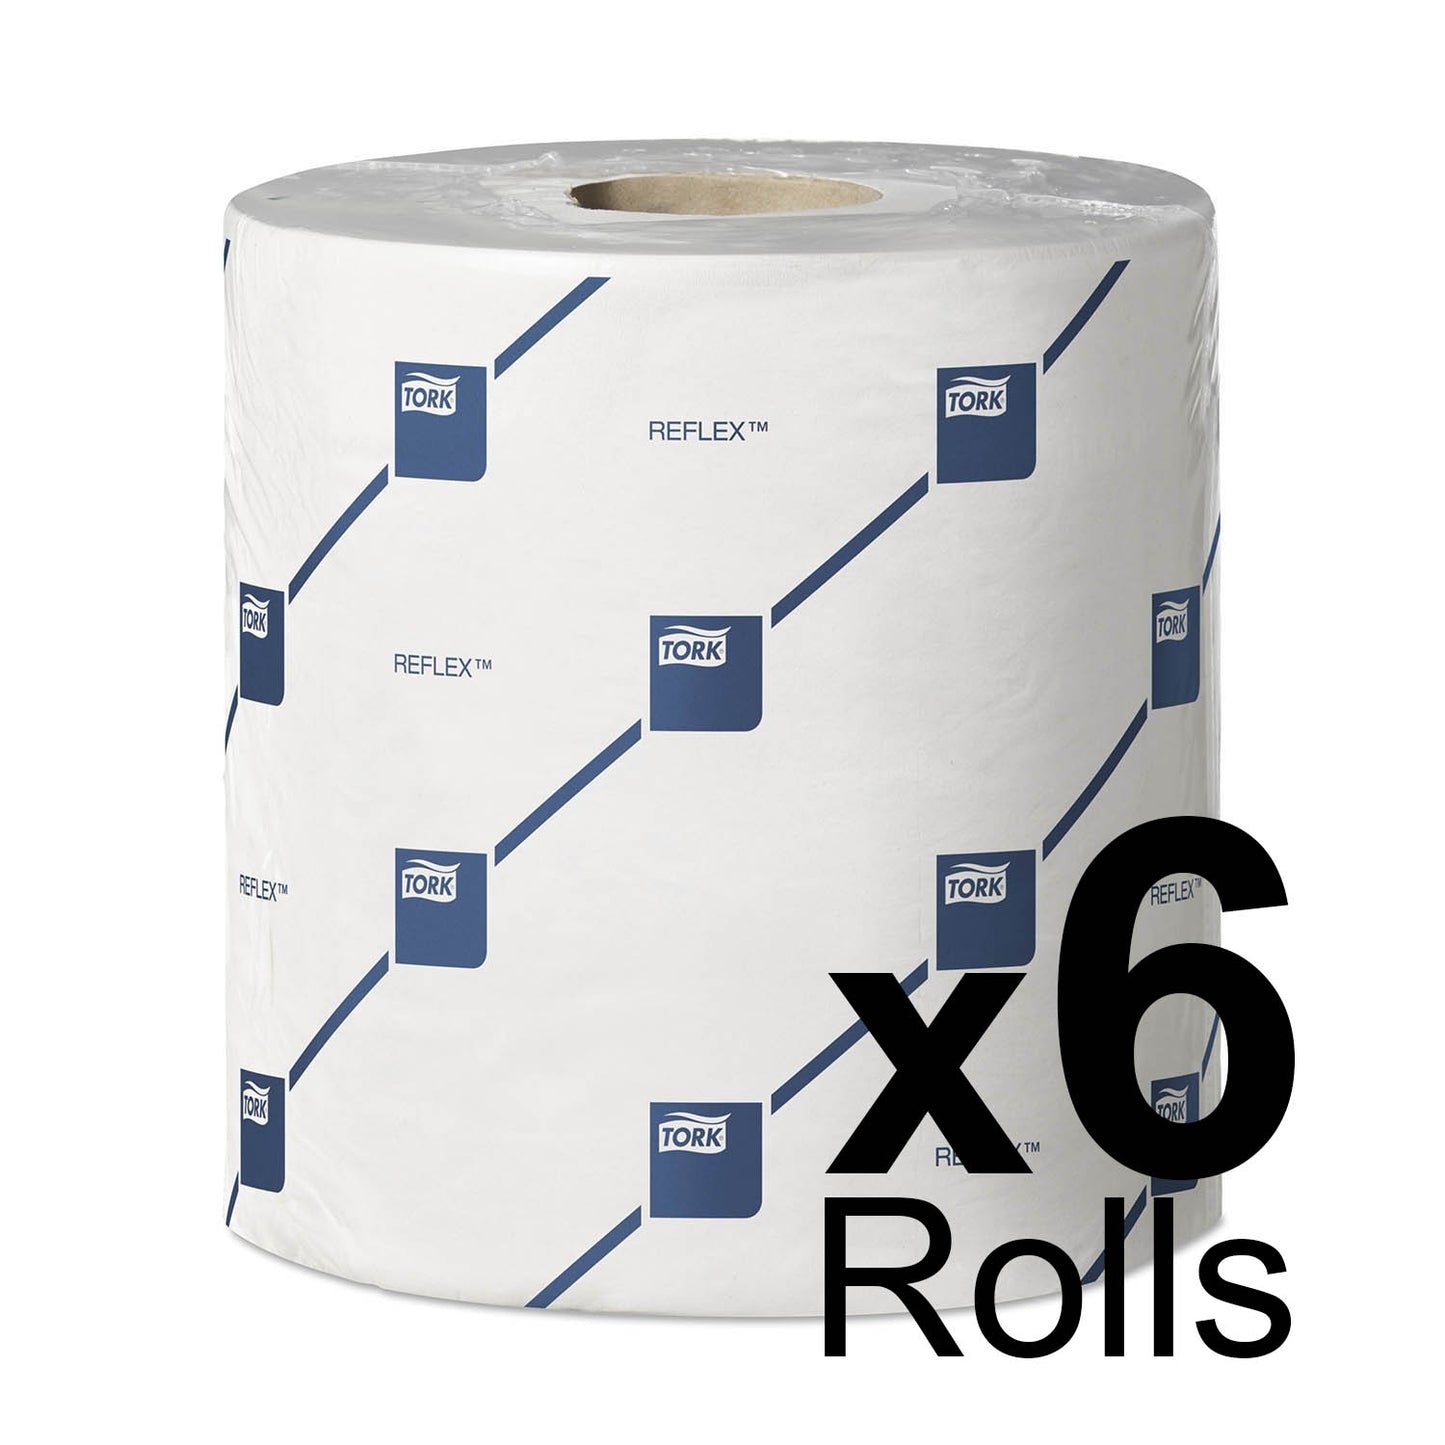 Tork Reflex Centrefeed Roll White 2Ply - 473264 - Case of 6 Rolls - 19.4cm x 150m